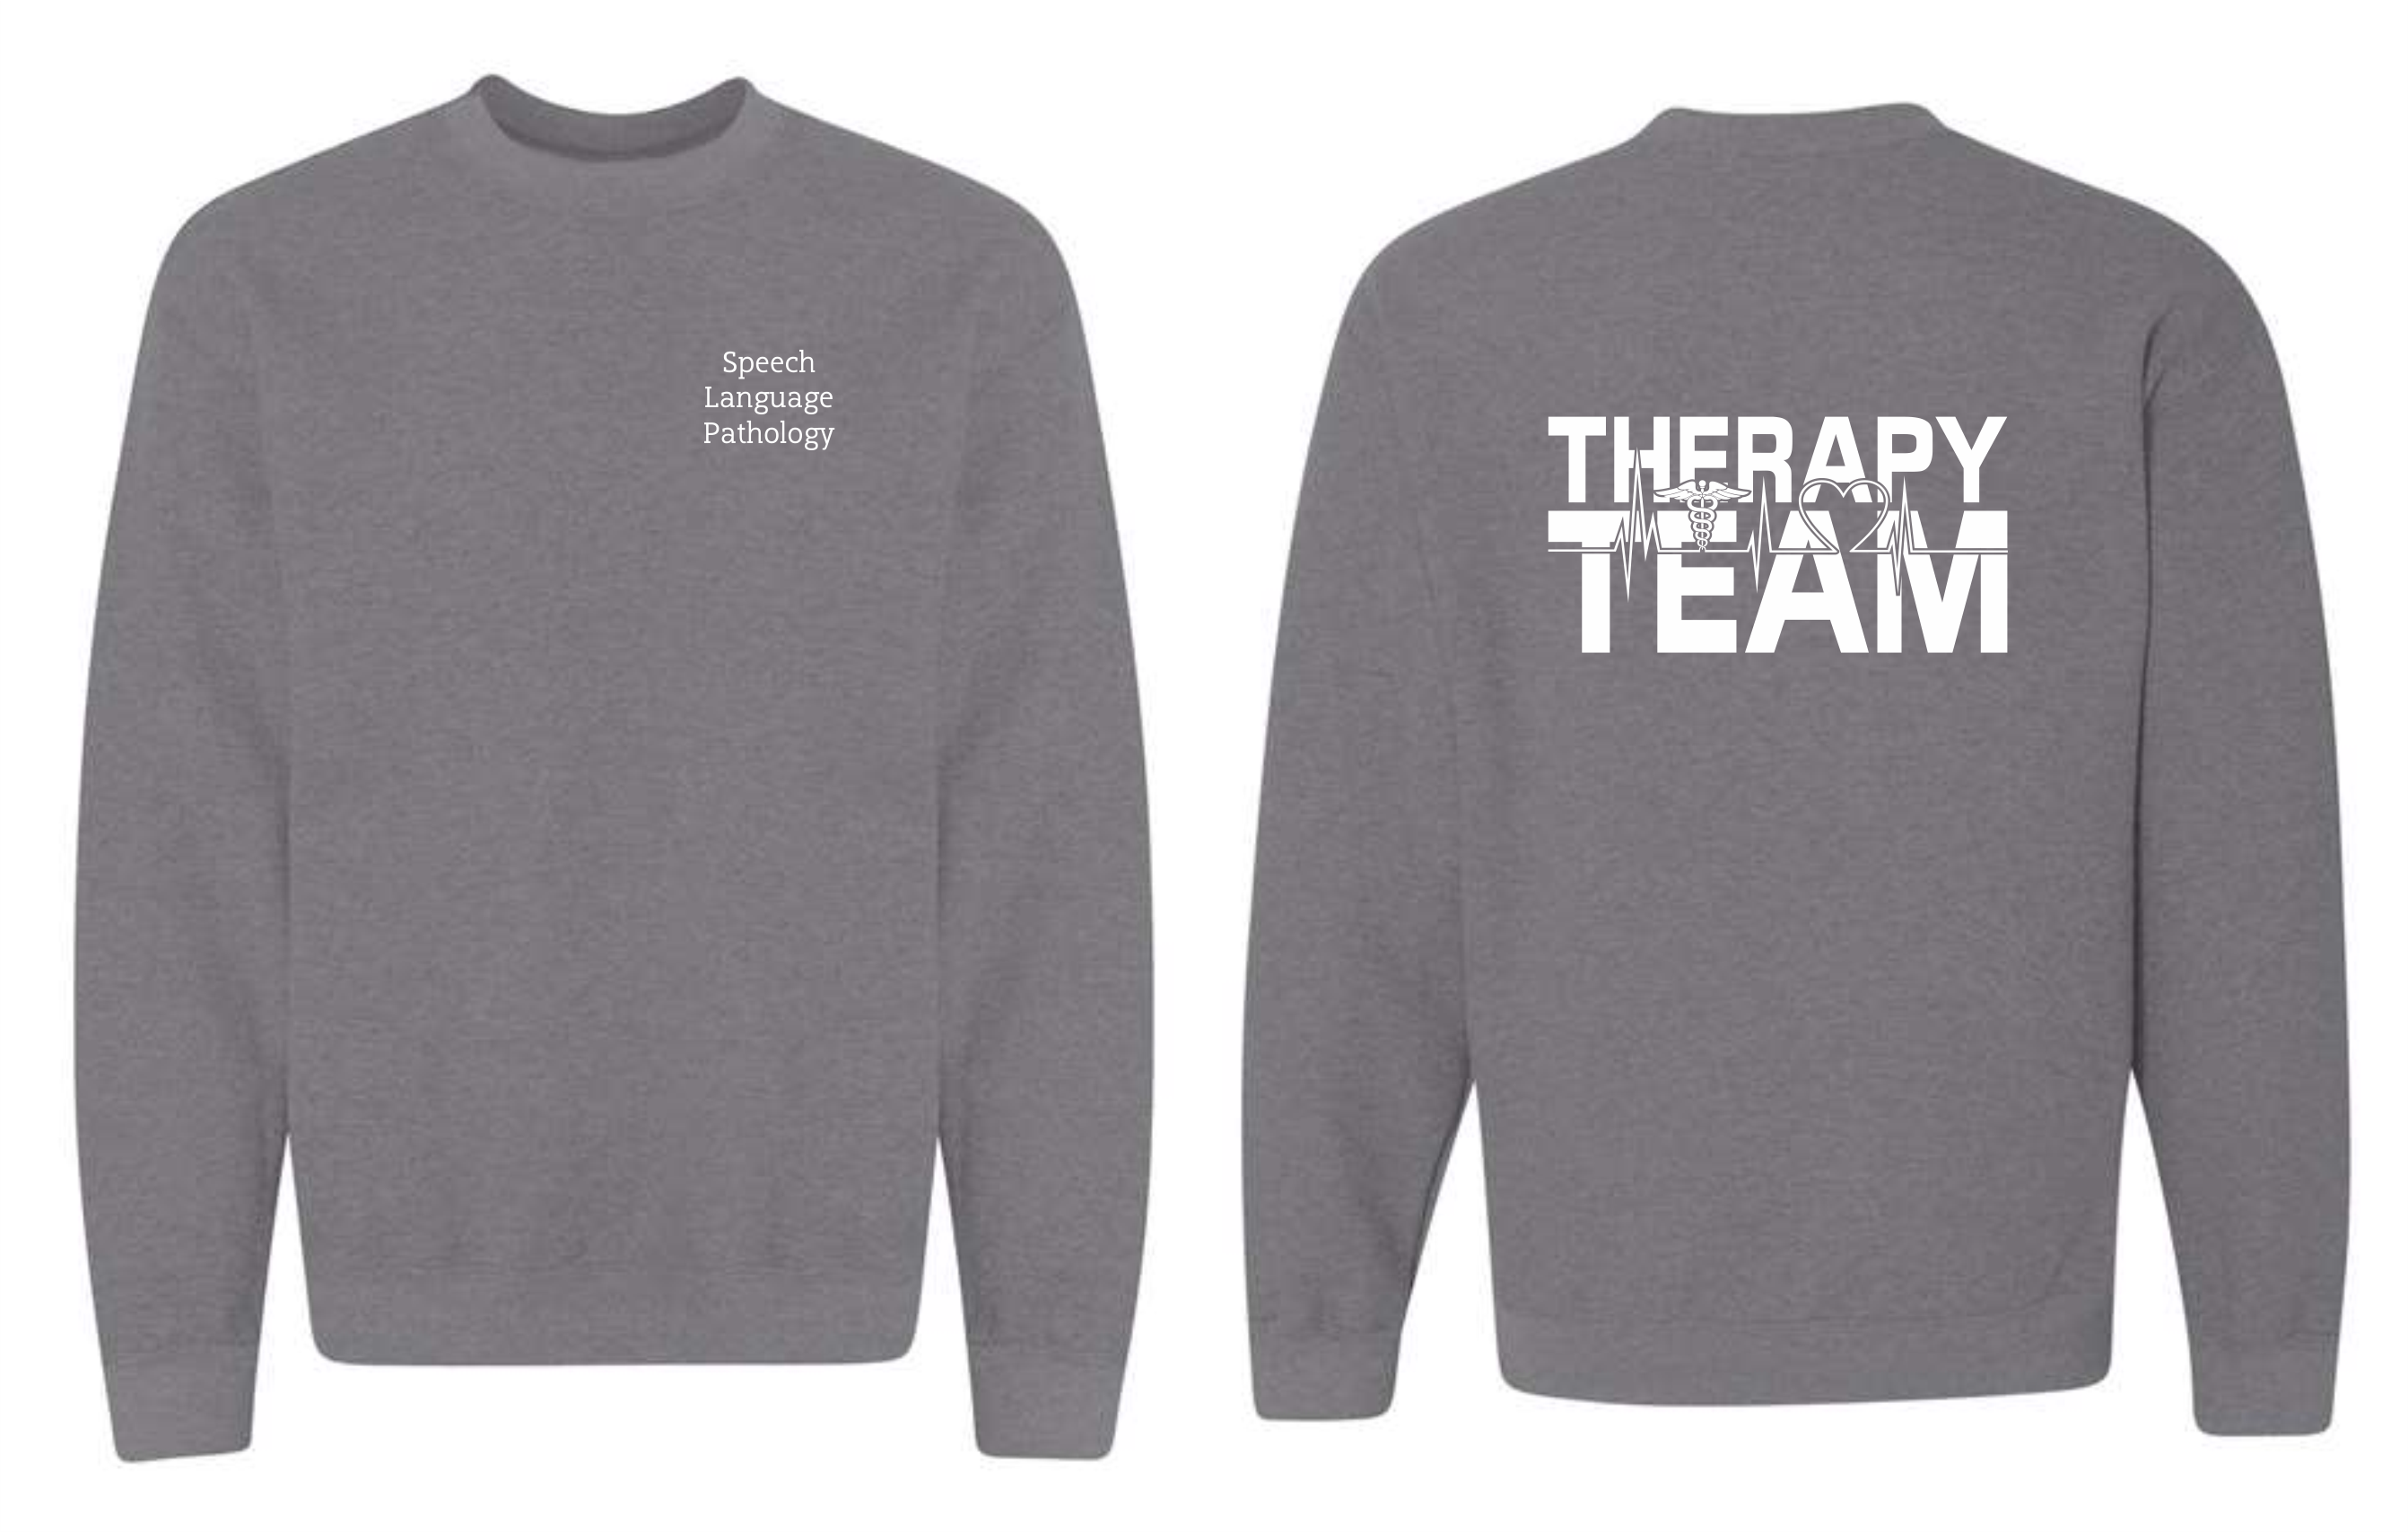 PHW - Occupational Therapy Team - Cotton Crewneck Sweatshirt